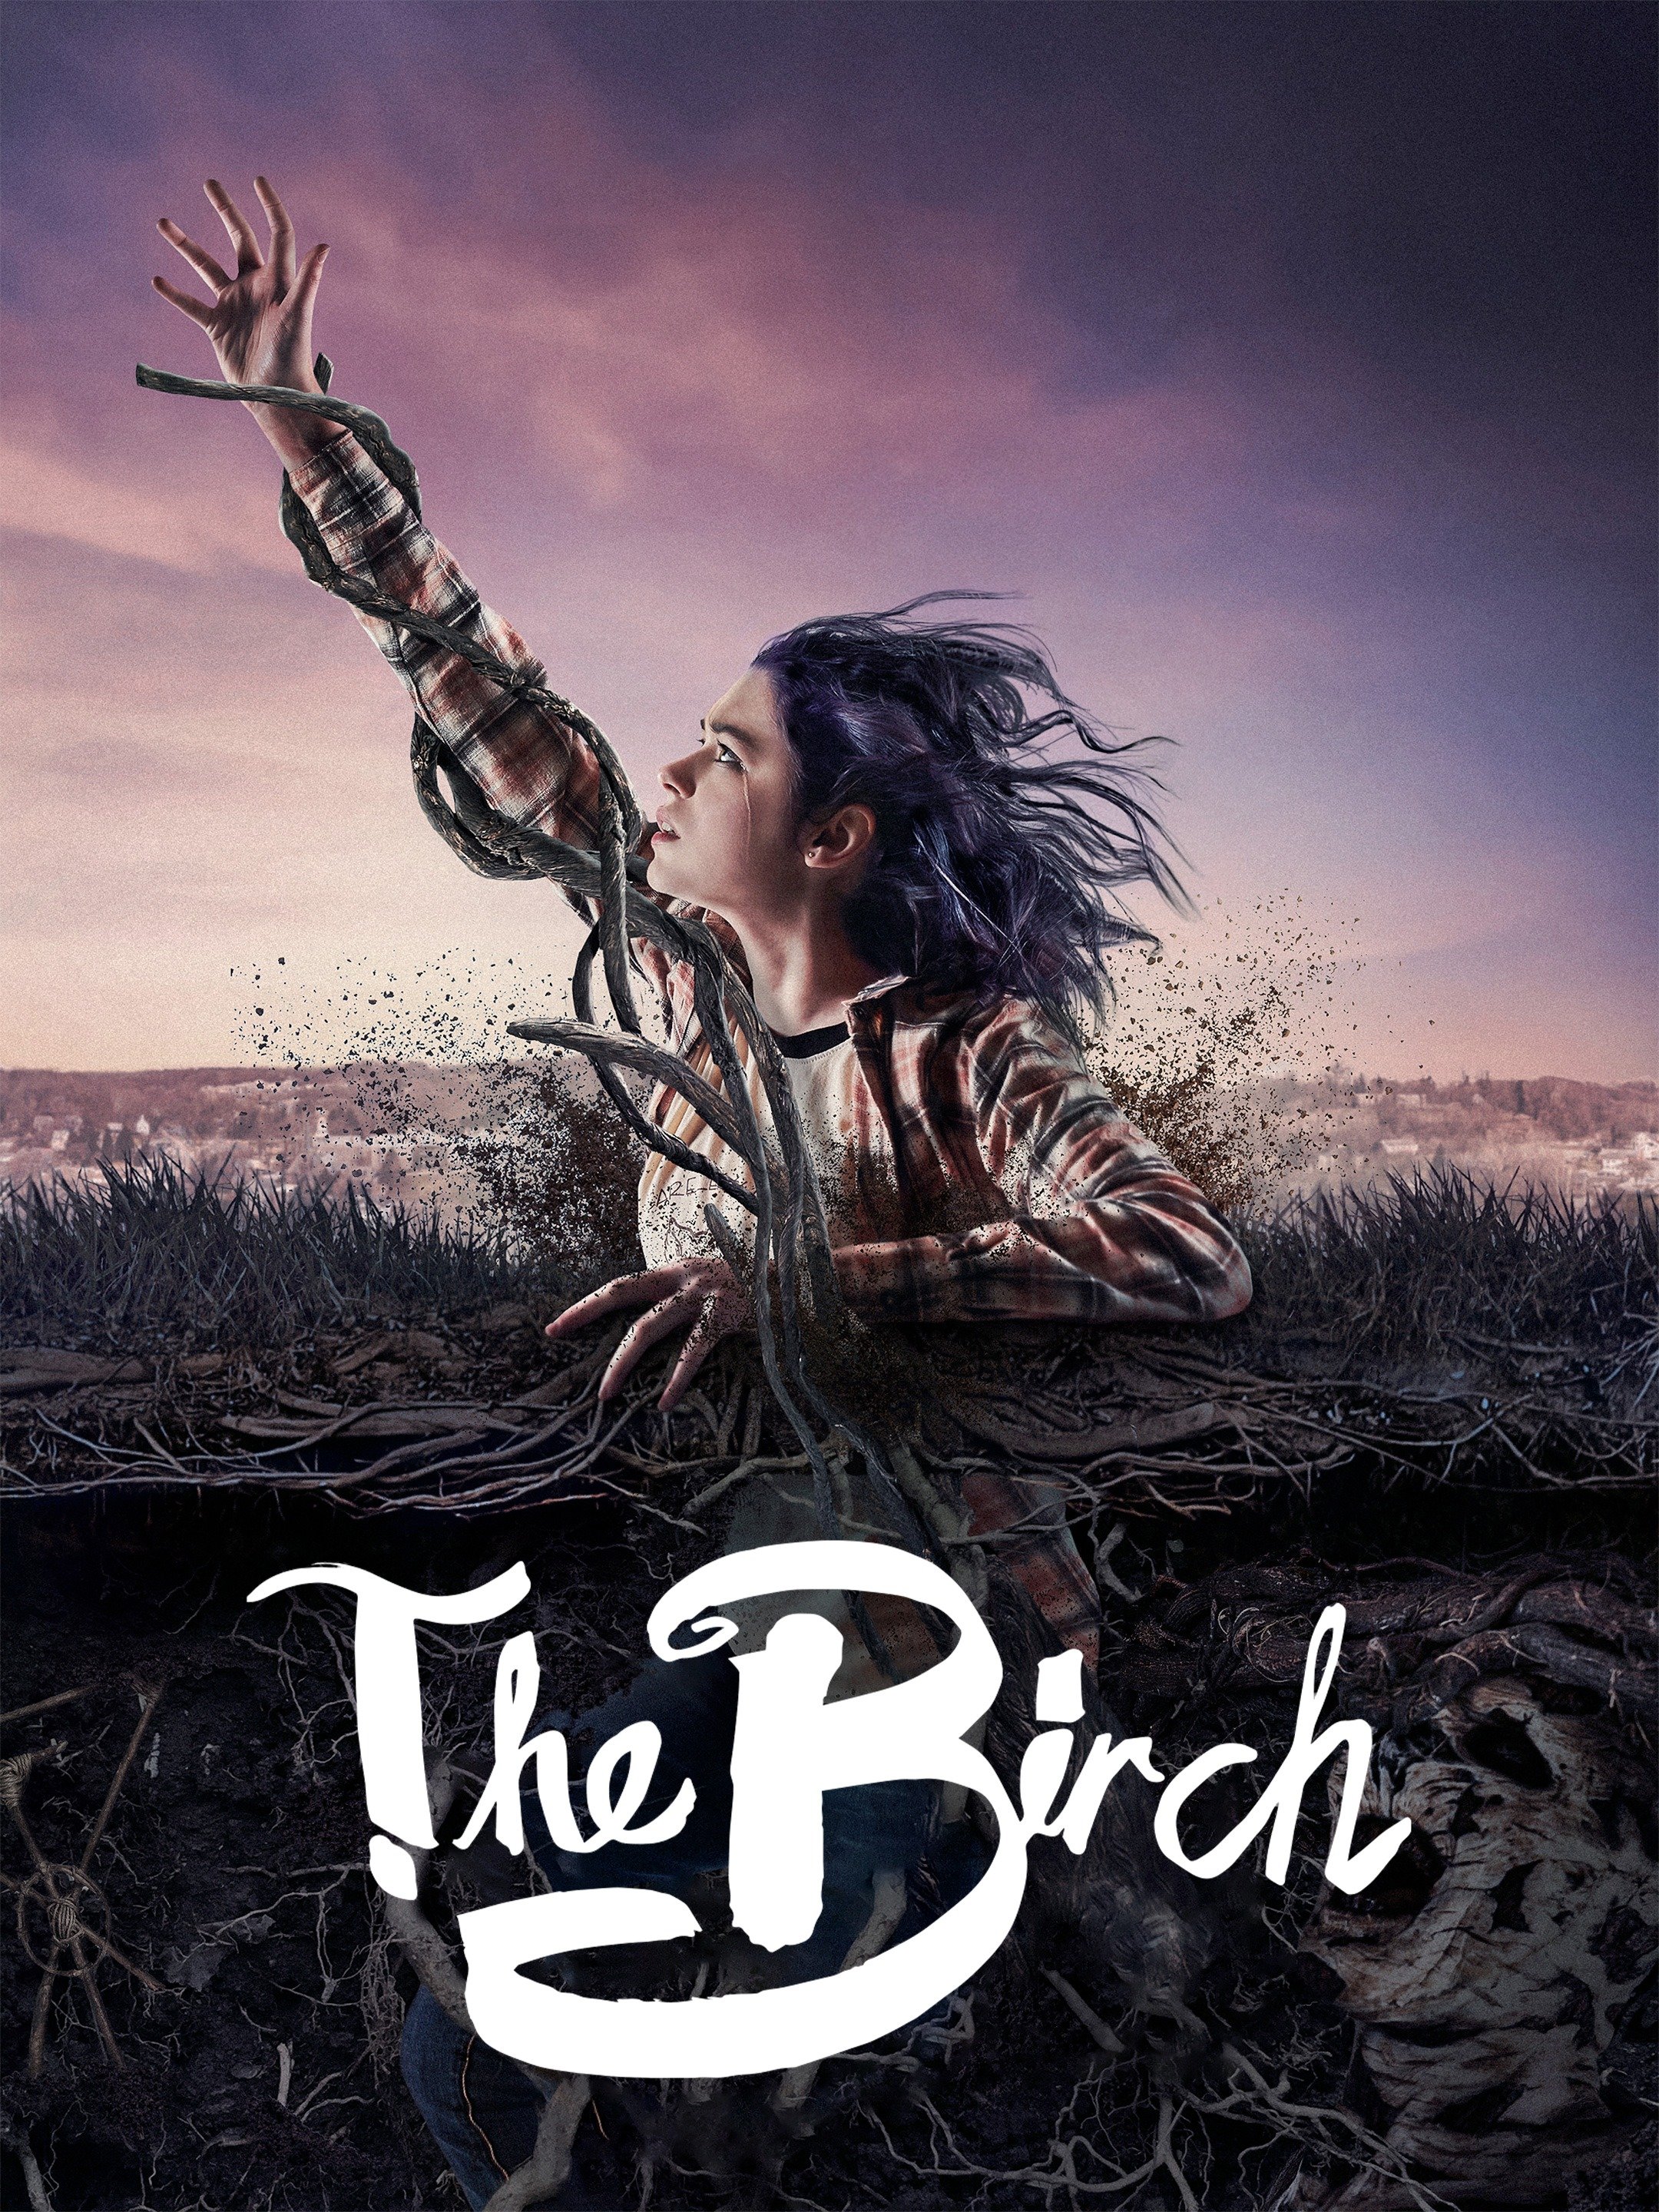 the birchbark series